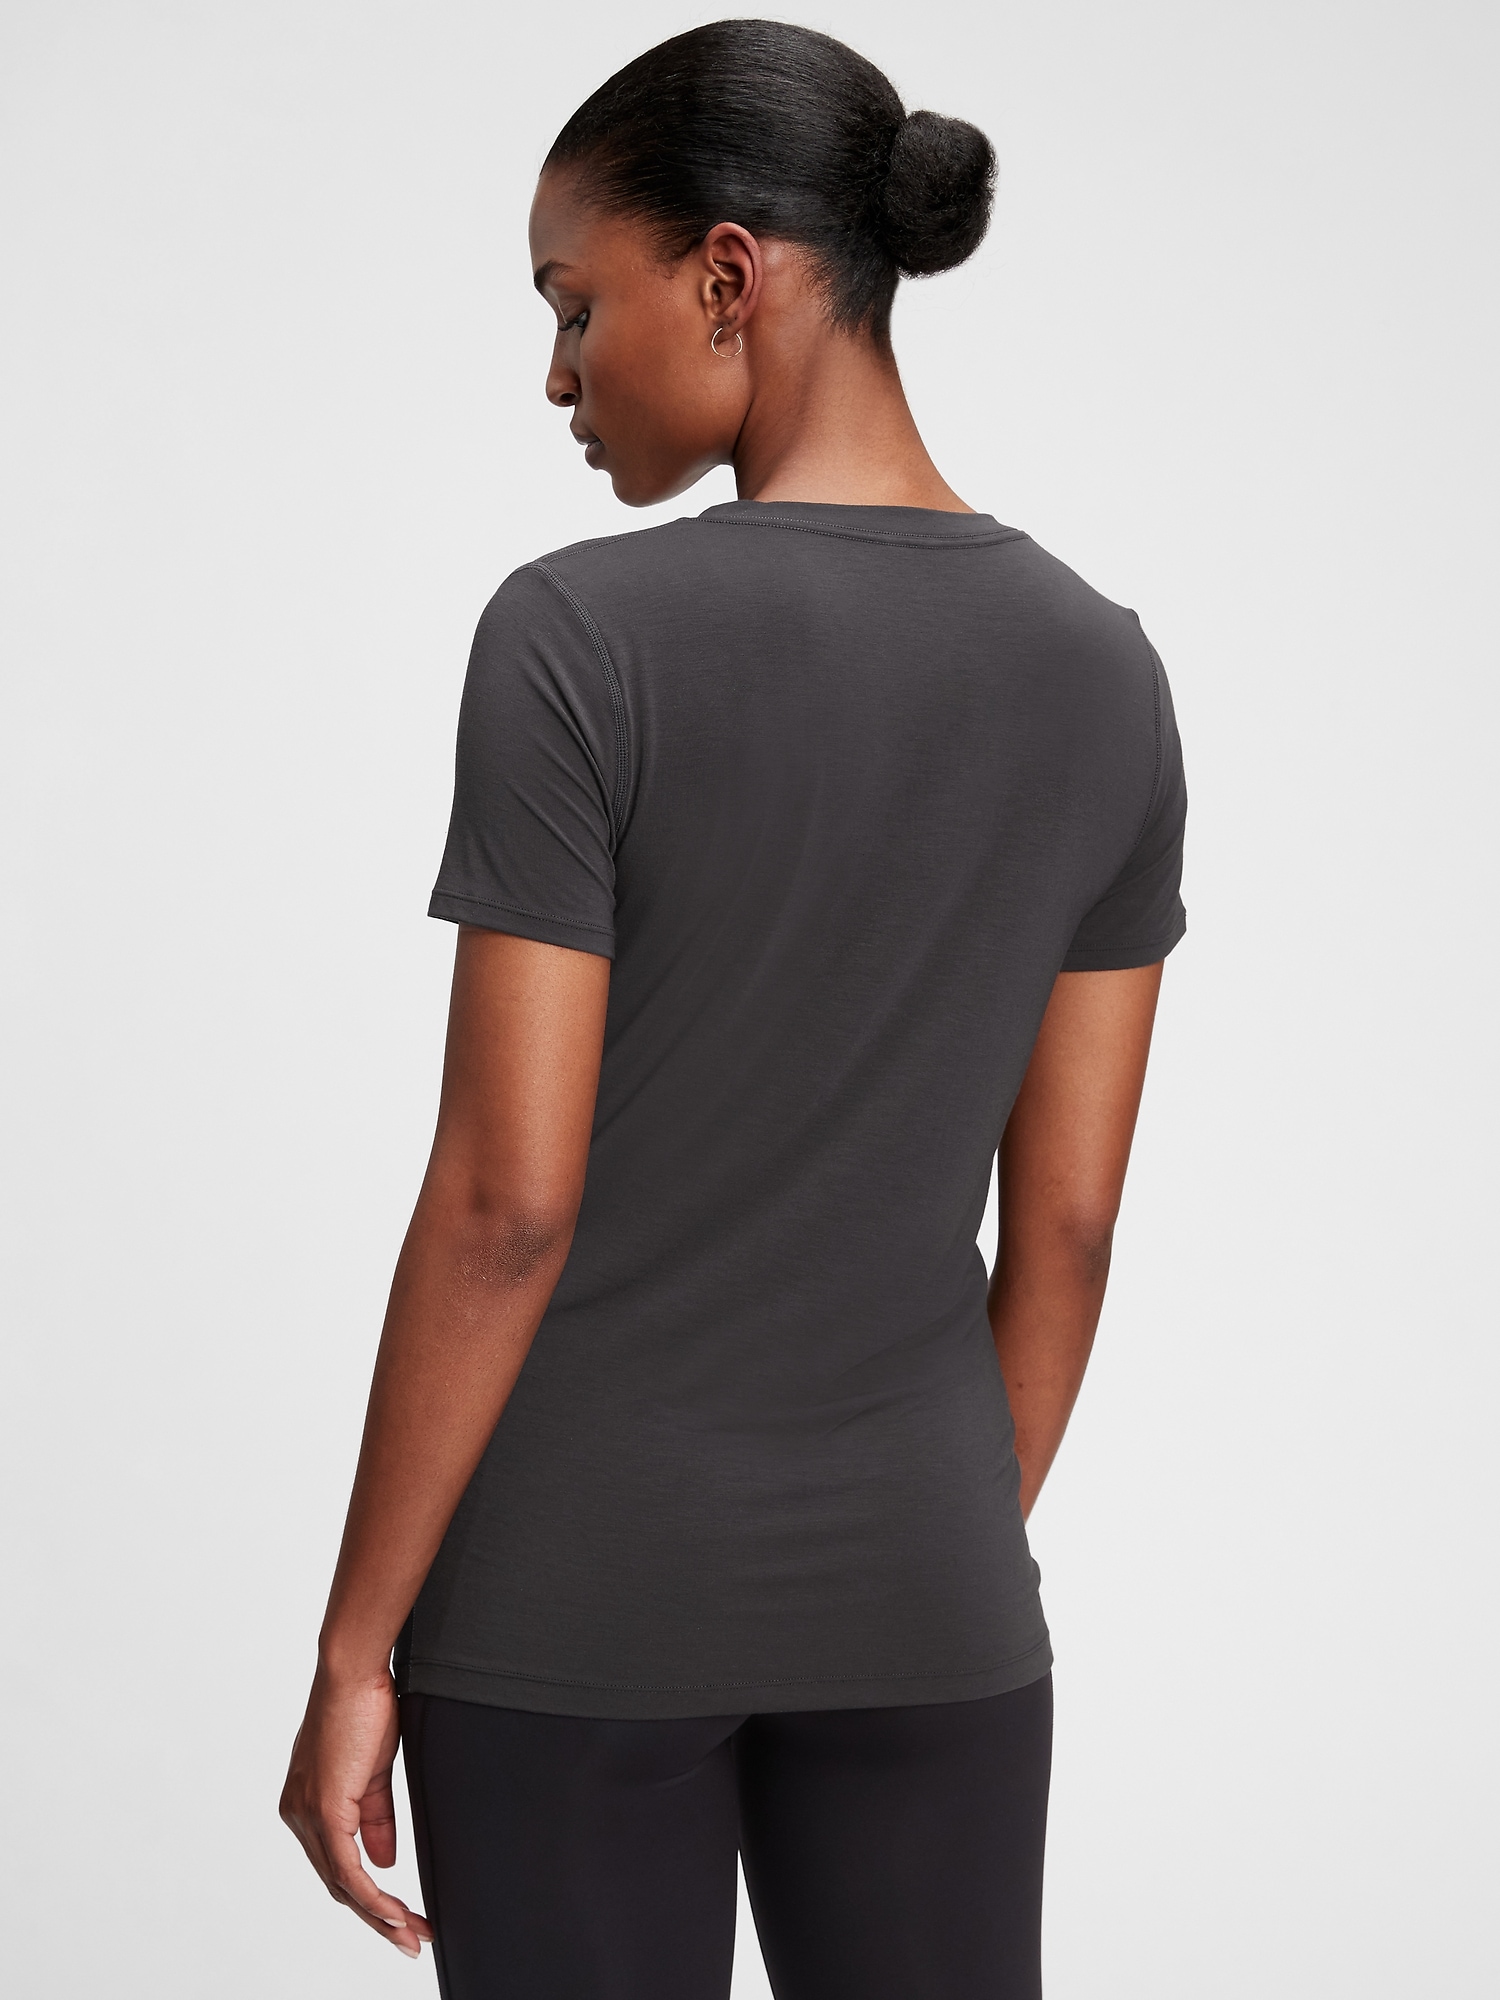 NEW GAP FIT BLACK Long Sleeve V Neck Running Athletic Top Shirt SMALL S SM